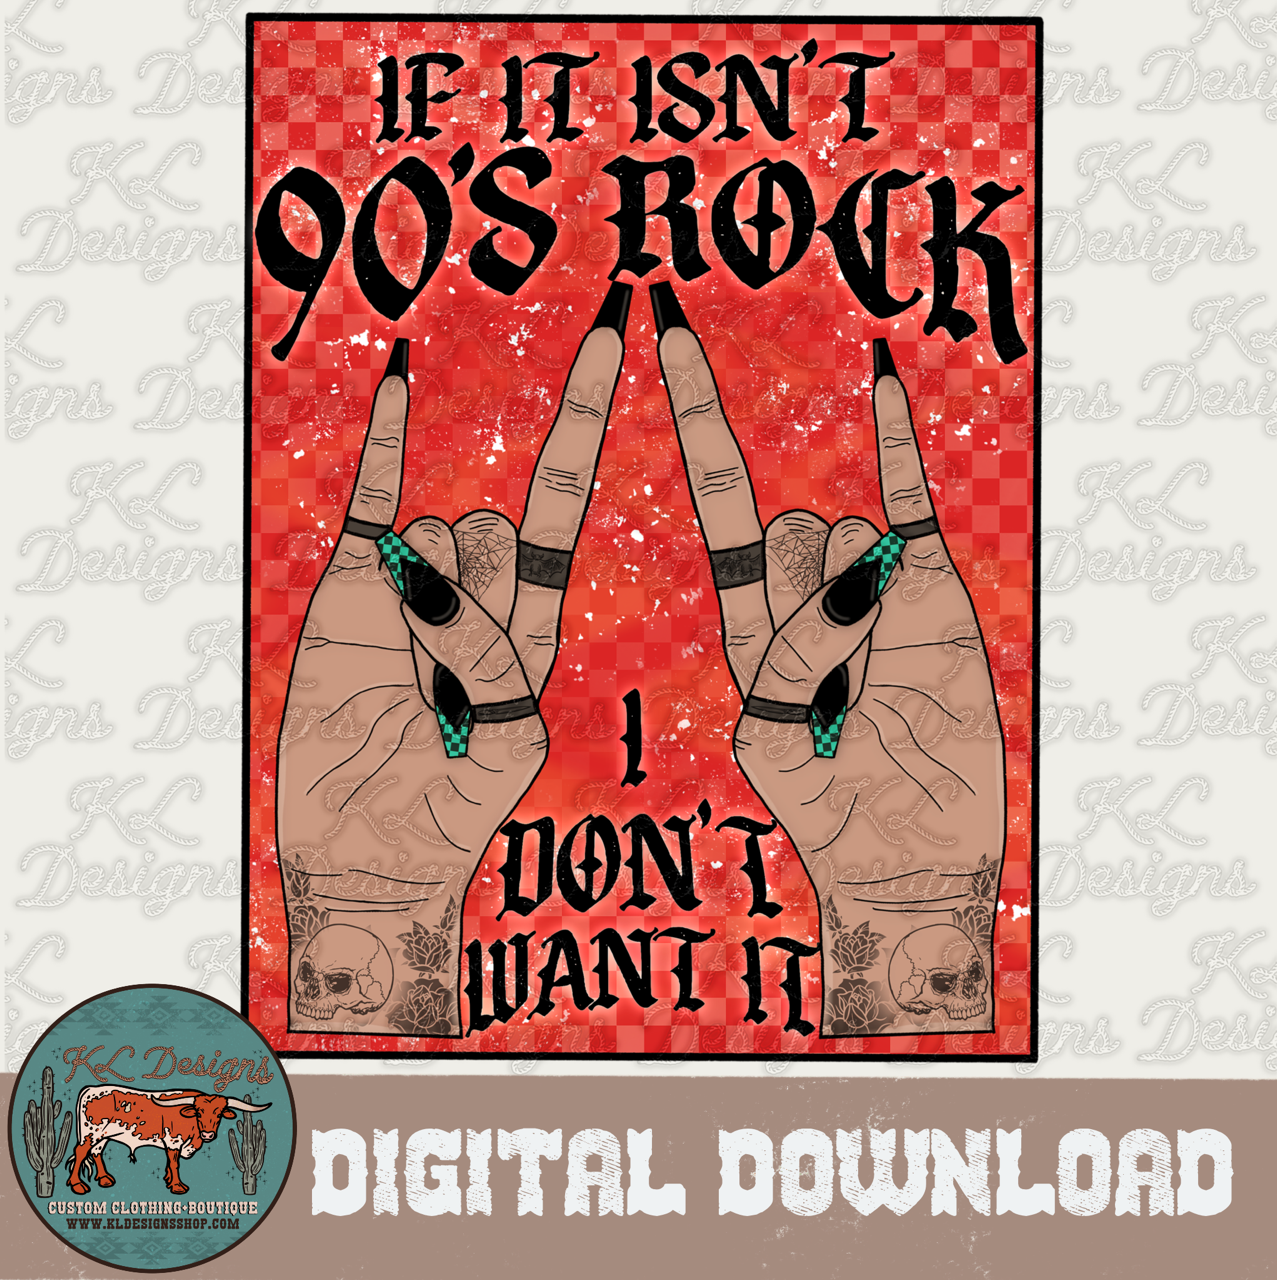 Red 90’s Rock - Digital Download